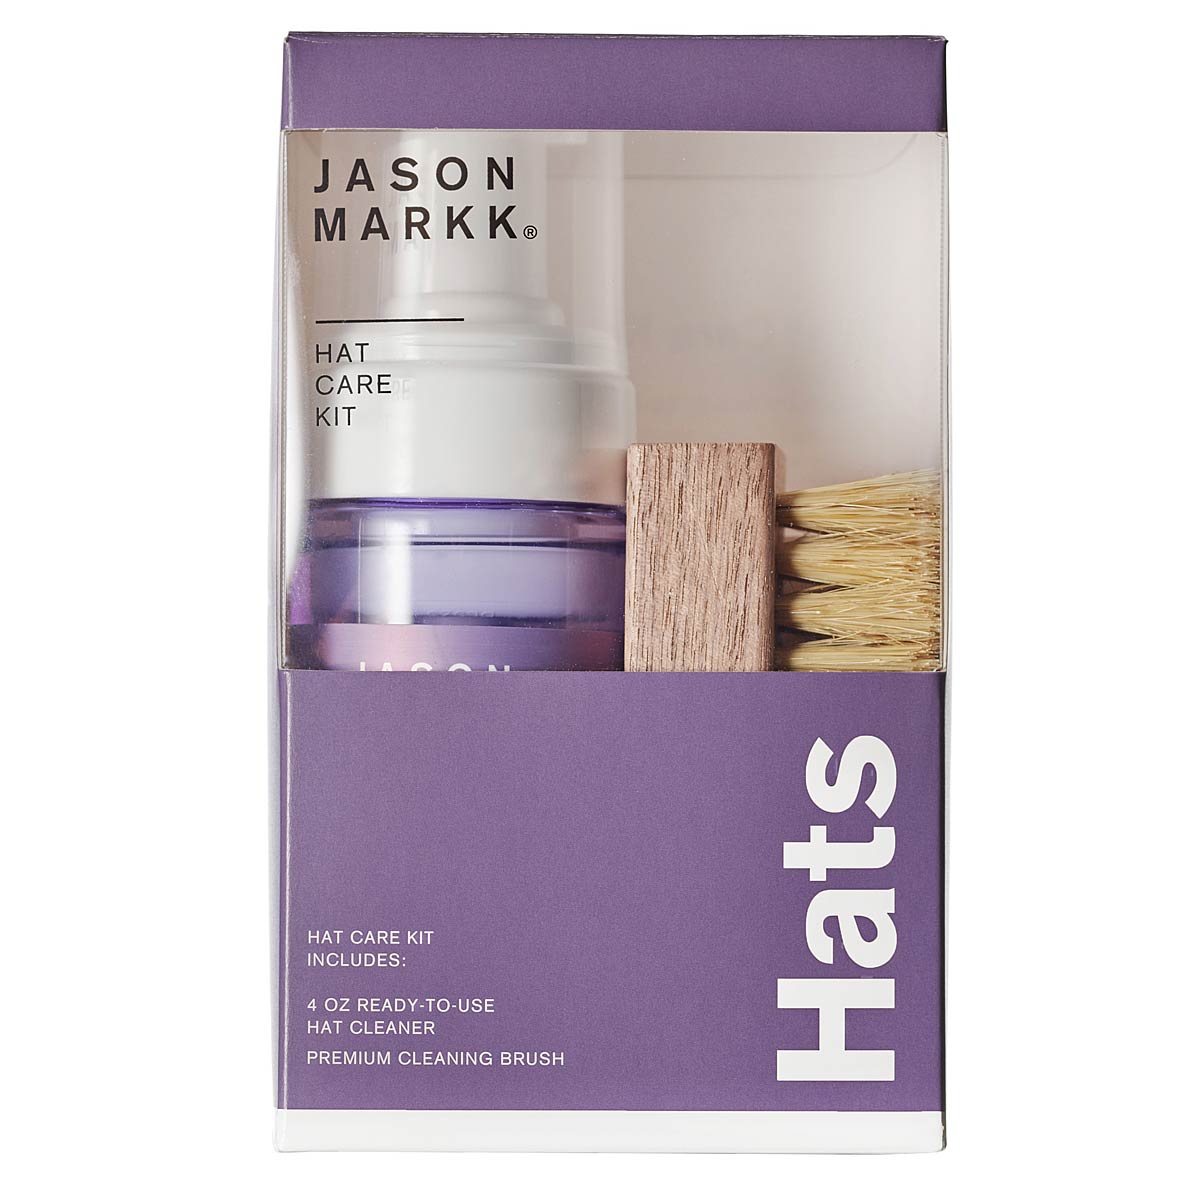 Image of Jason Markk Hat Care Kit, White/purple